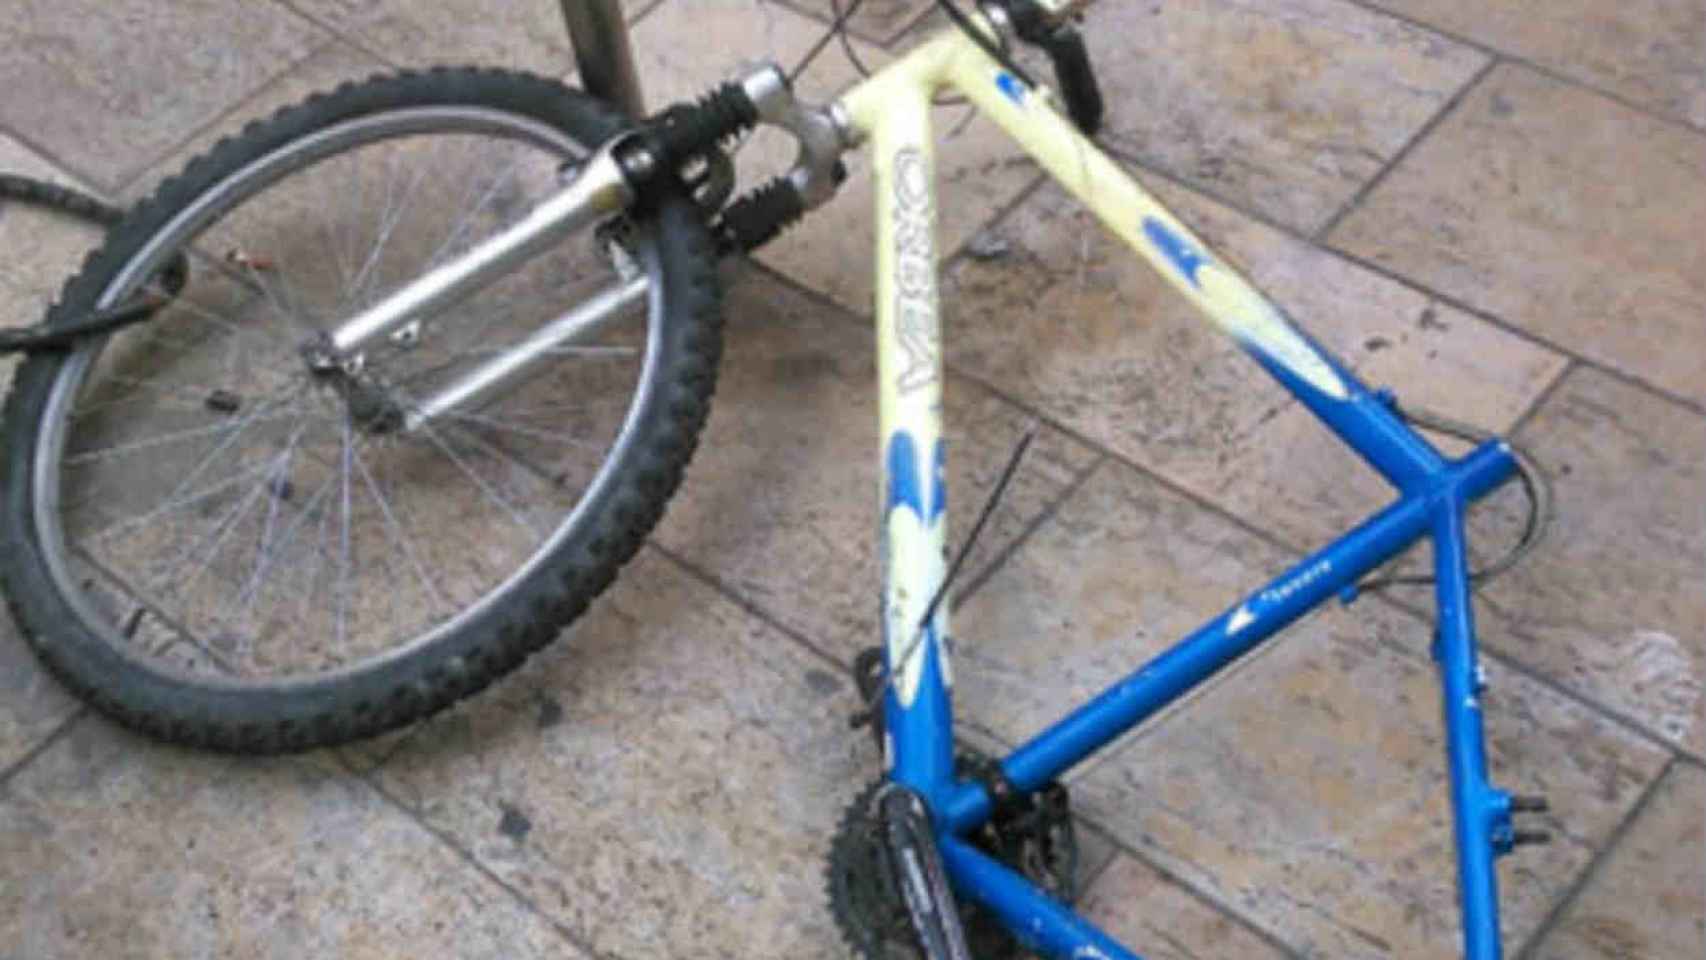 Bicicleta con síntoma de haber sido abadonada / @barcelona_GUB